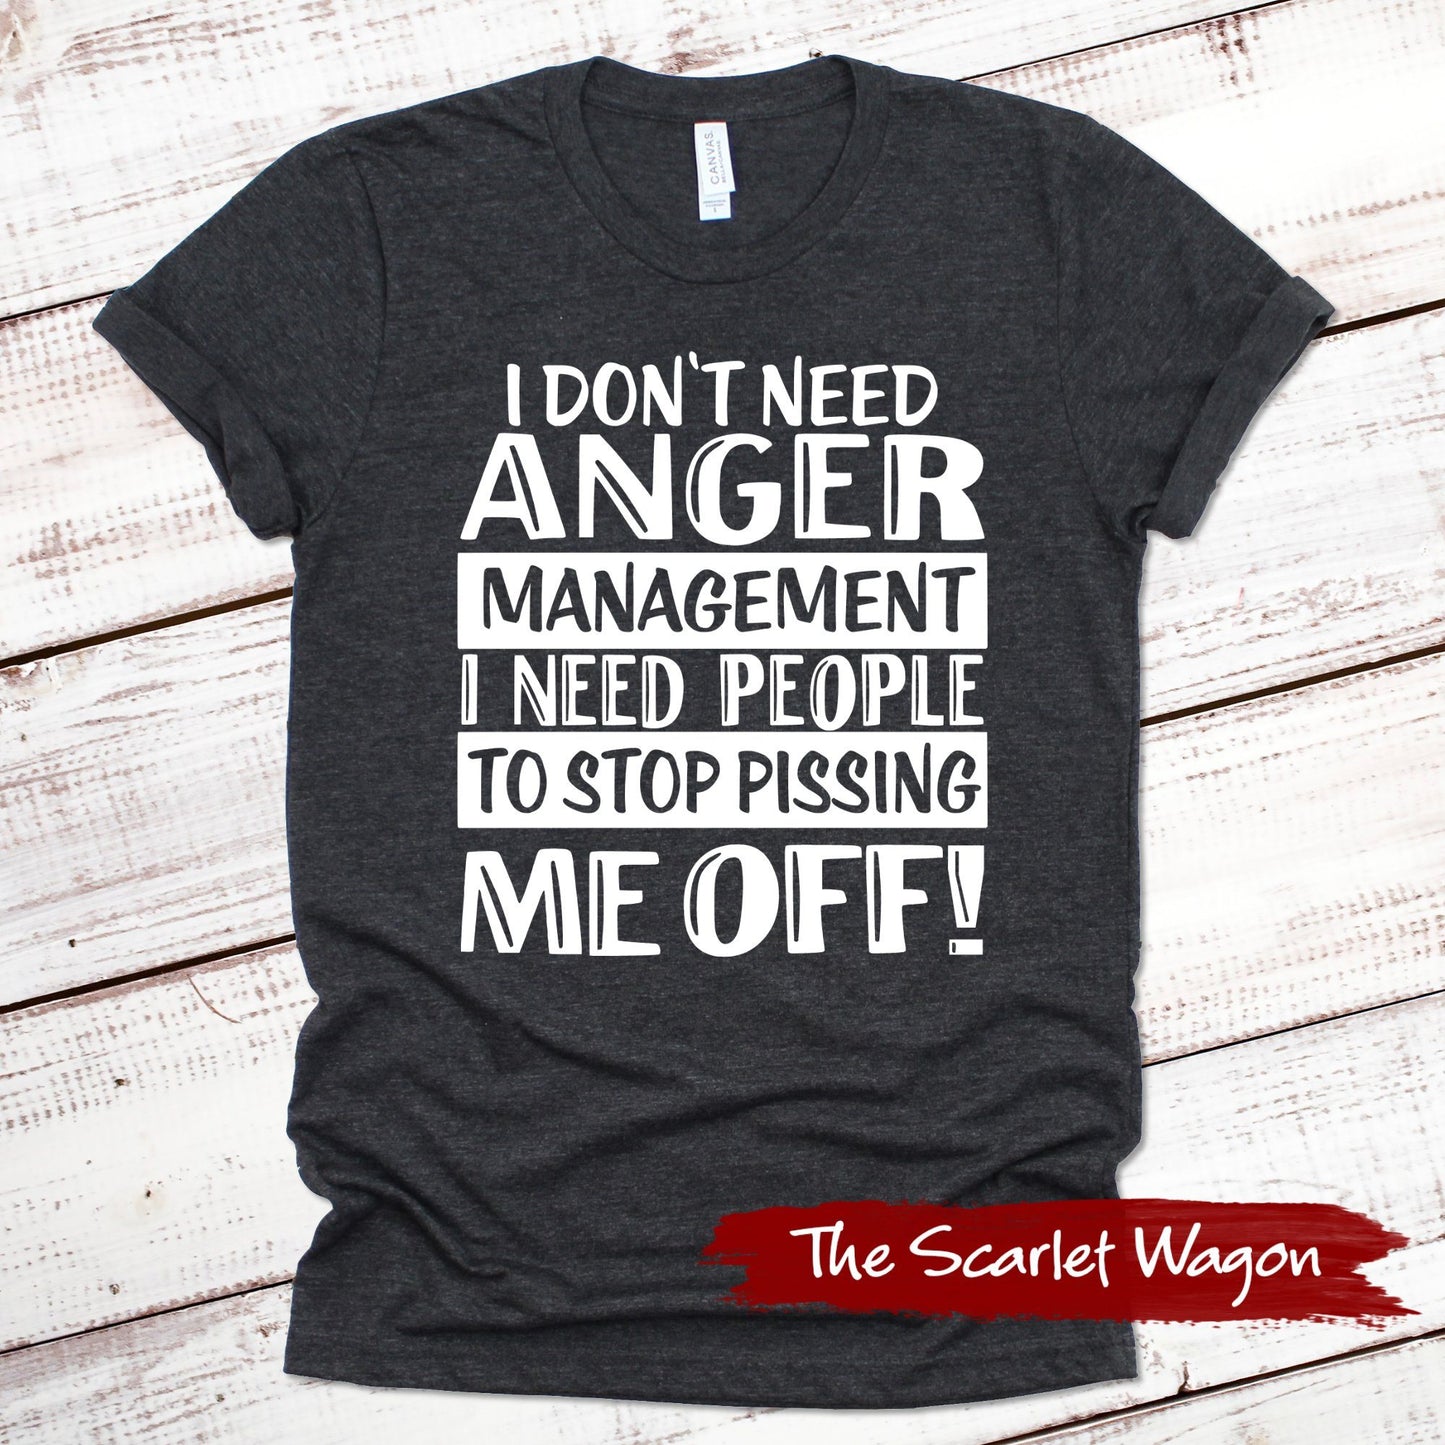 I Don't Need Anger Management Funny Shirt Scarlet Wagon Dark Gray Heather XS 